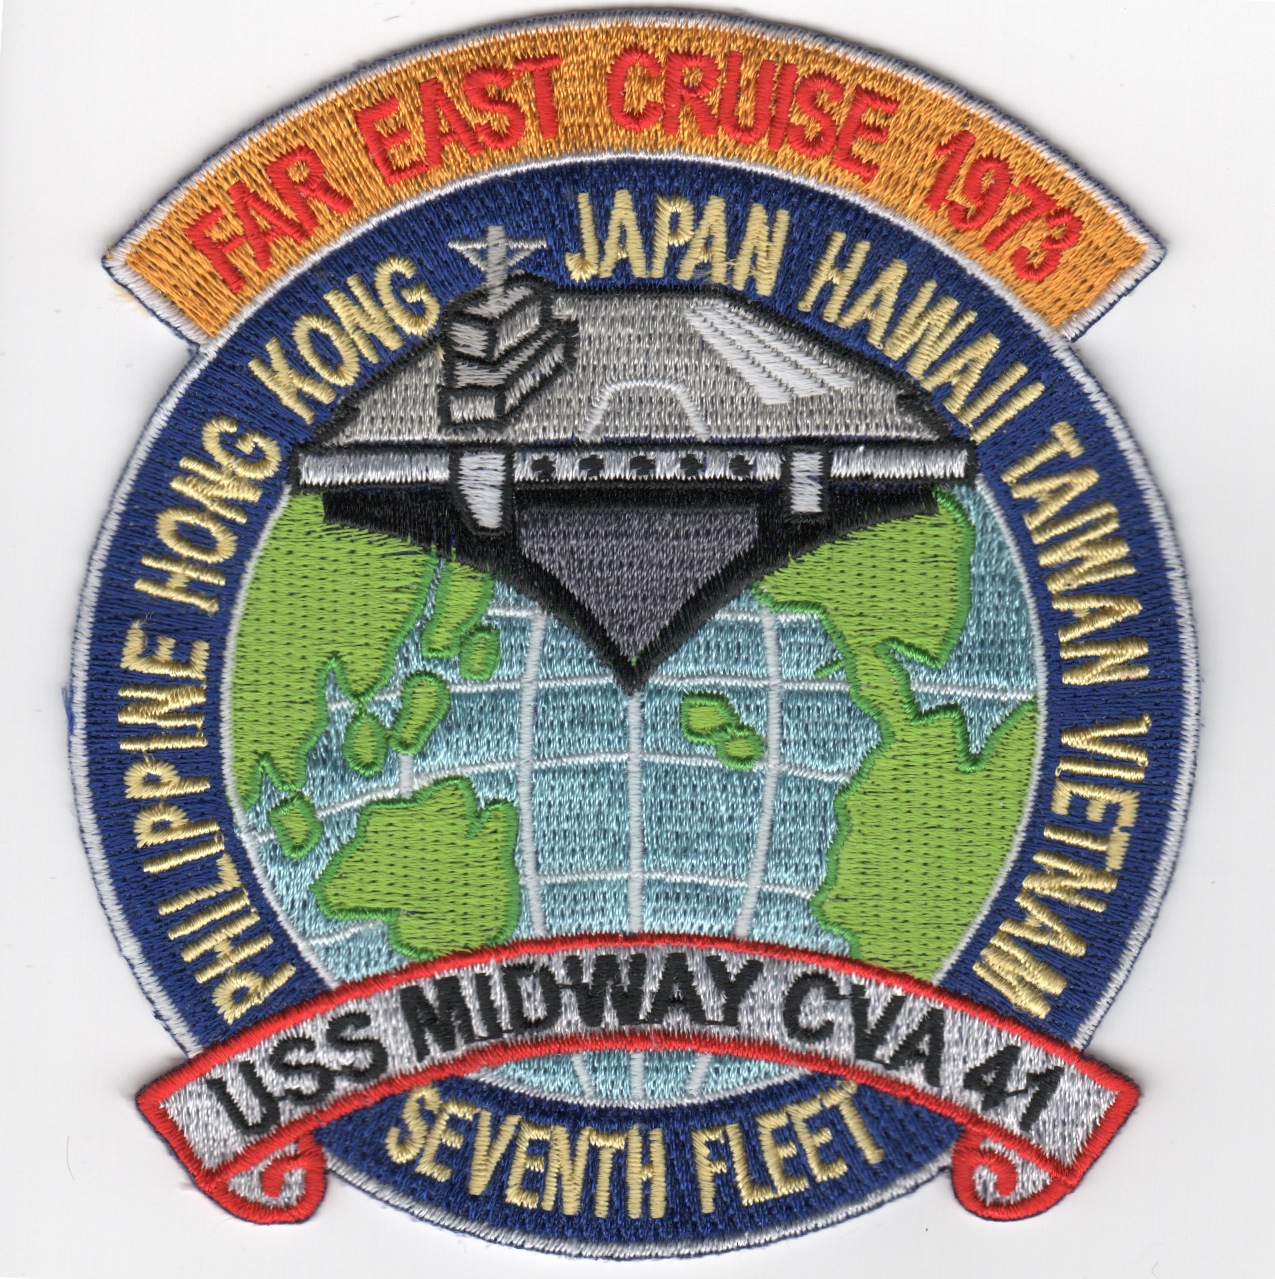 CVA-41 1973 'Far East Cruise' Patch (Repro)